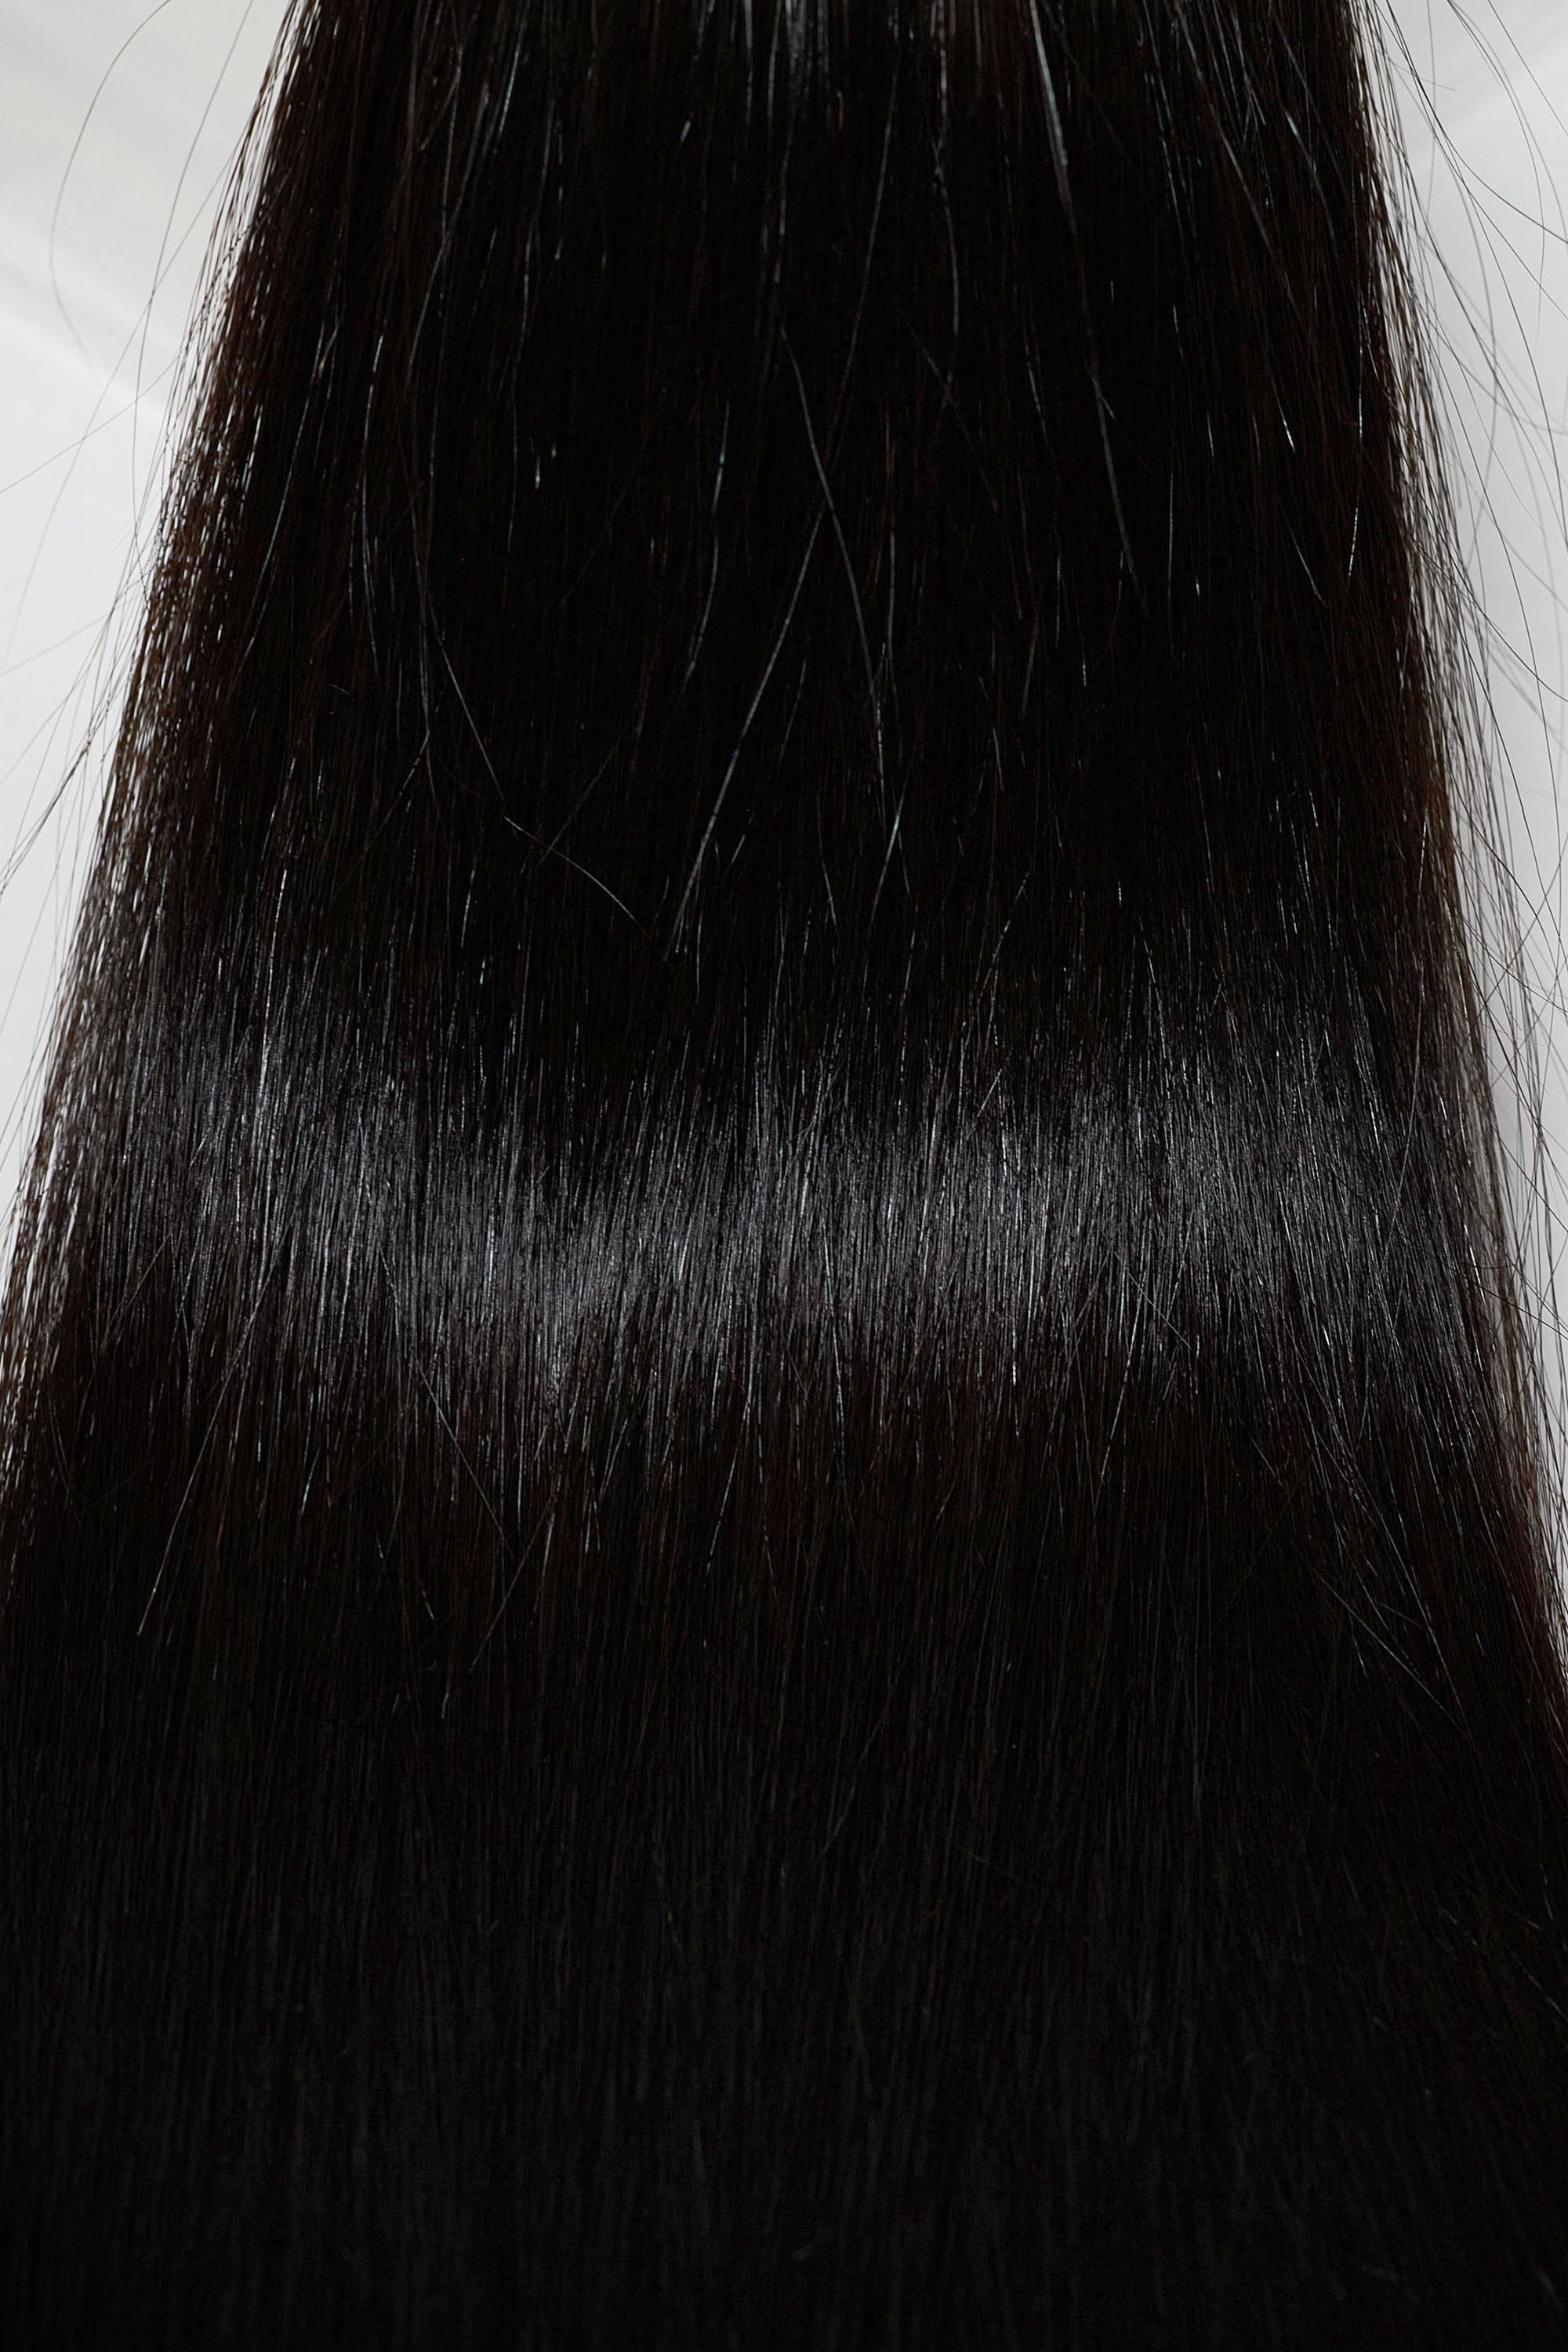 Behair professional Keratin Tip "Premium" 18" (45cm) Natural Straight Jet Black #1 - 25g (1g each pcs) hair extensions